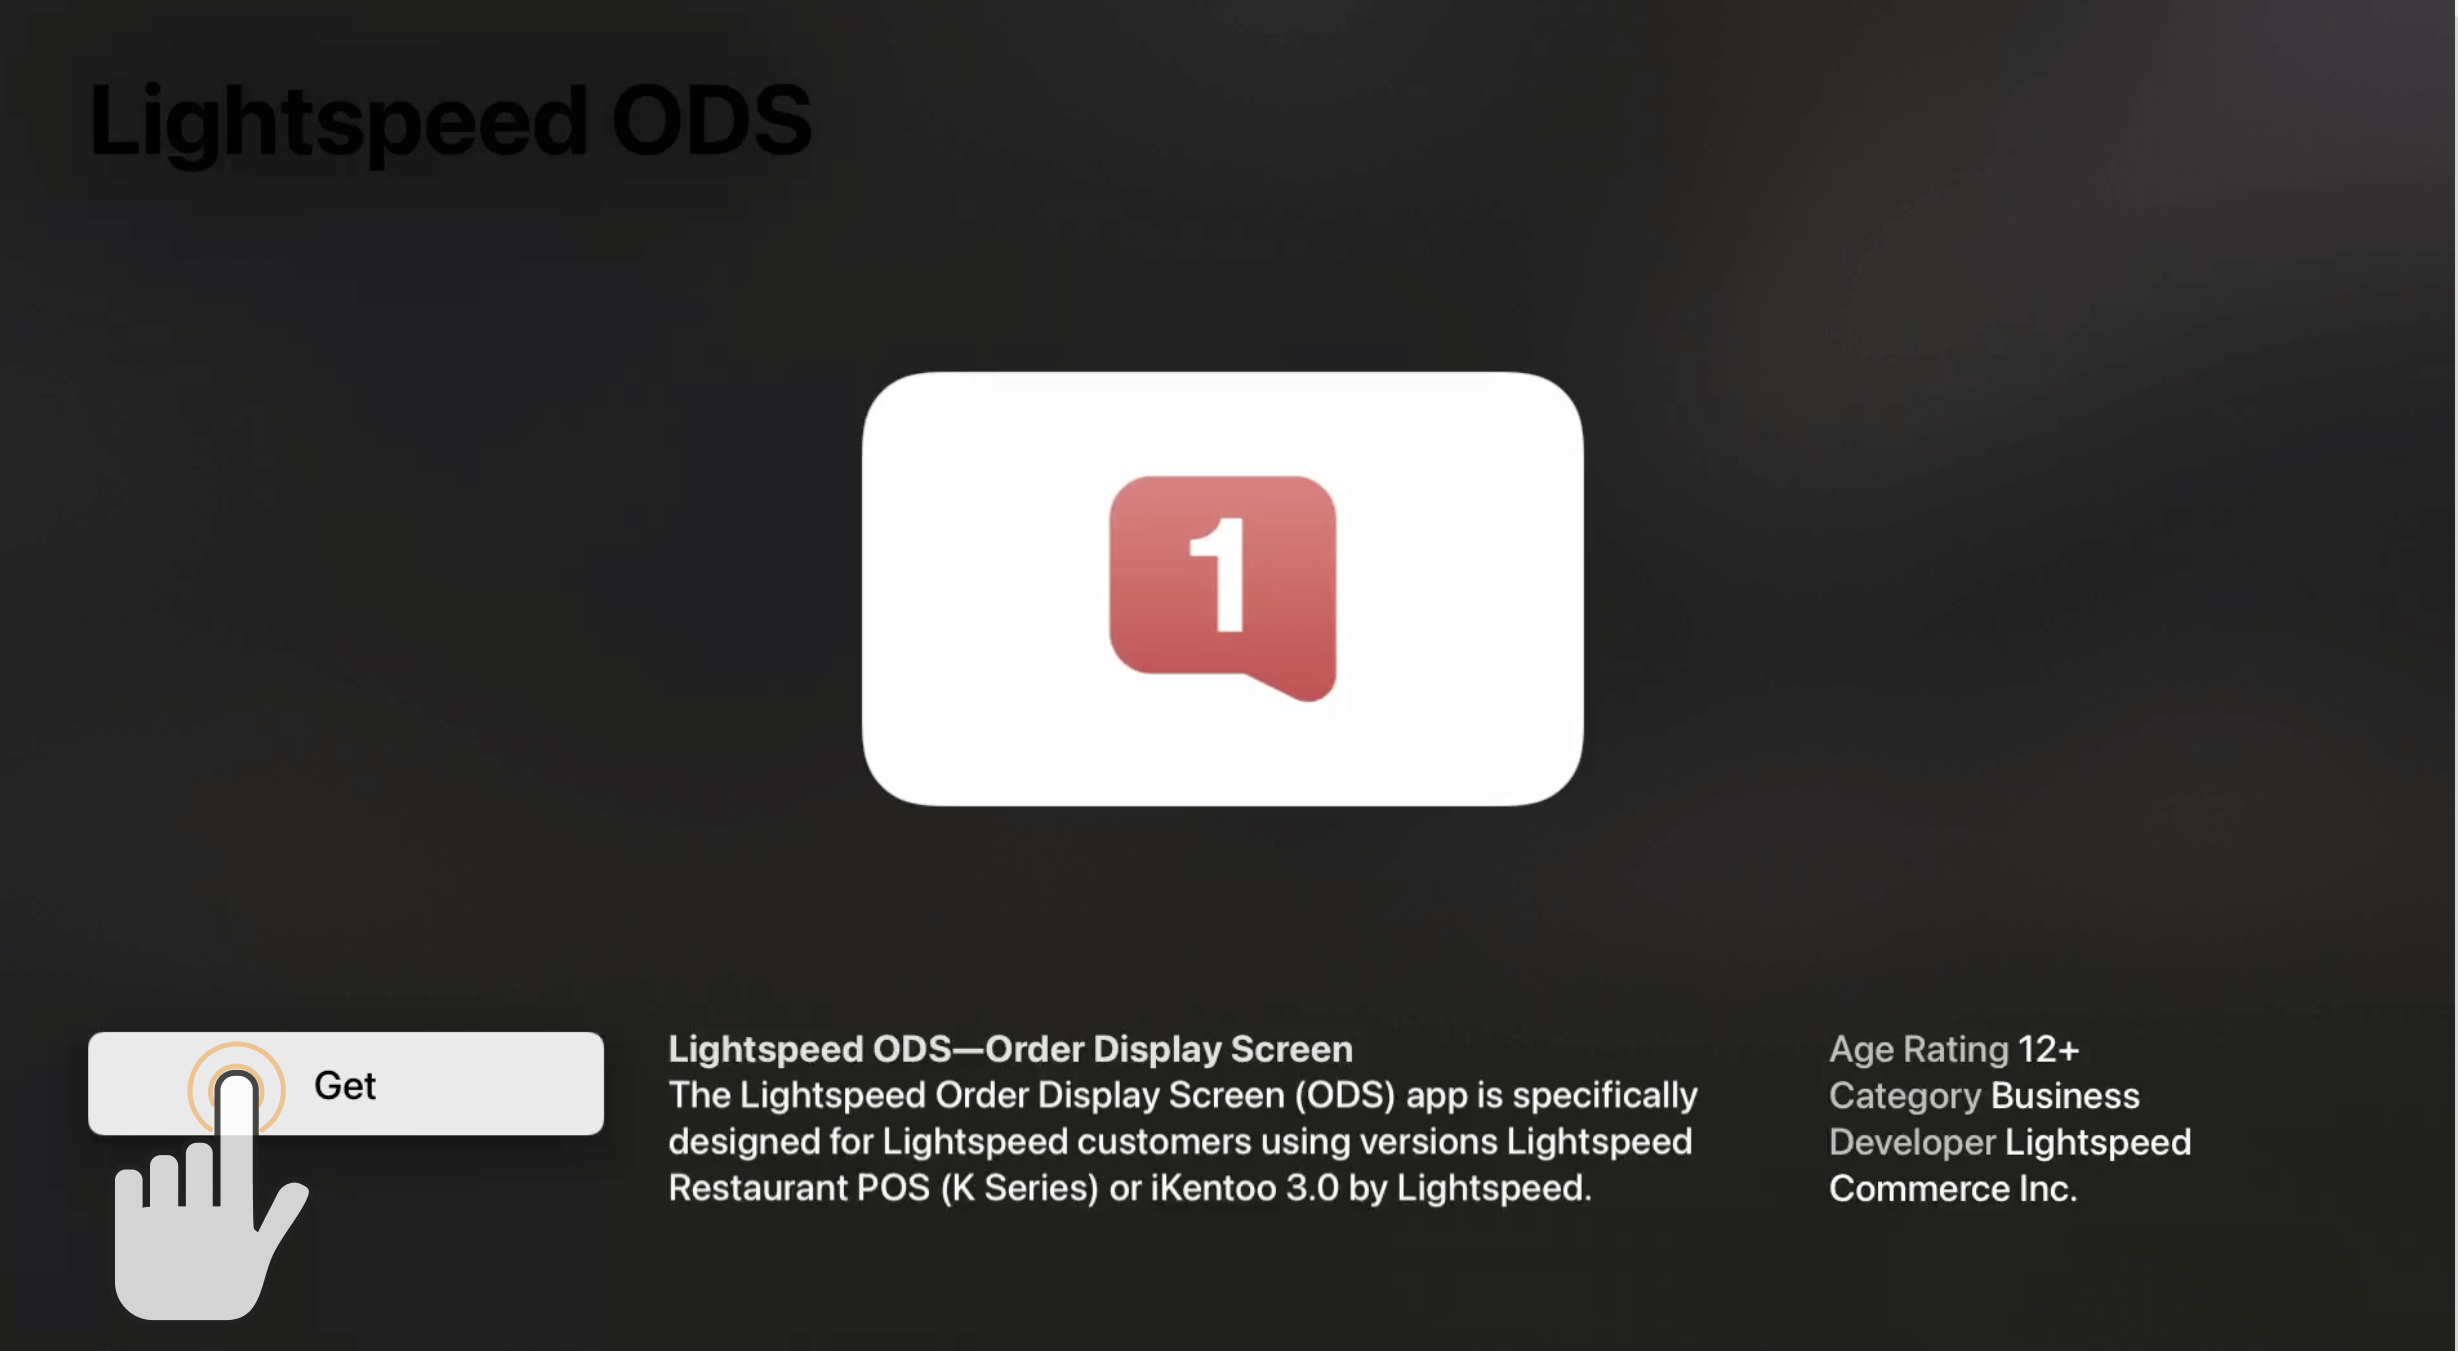 Get the Lightspeed ODS app